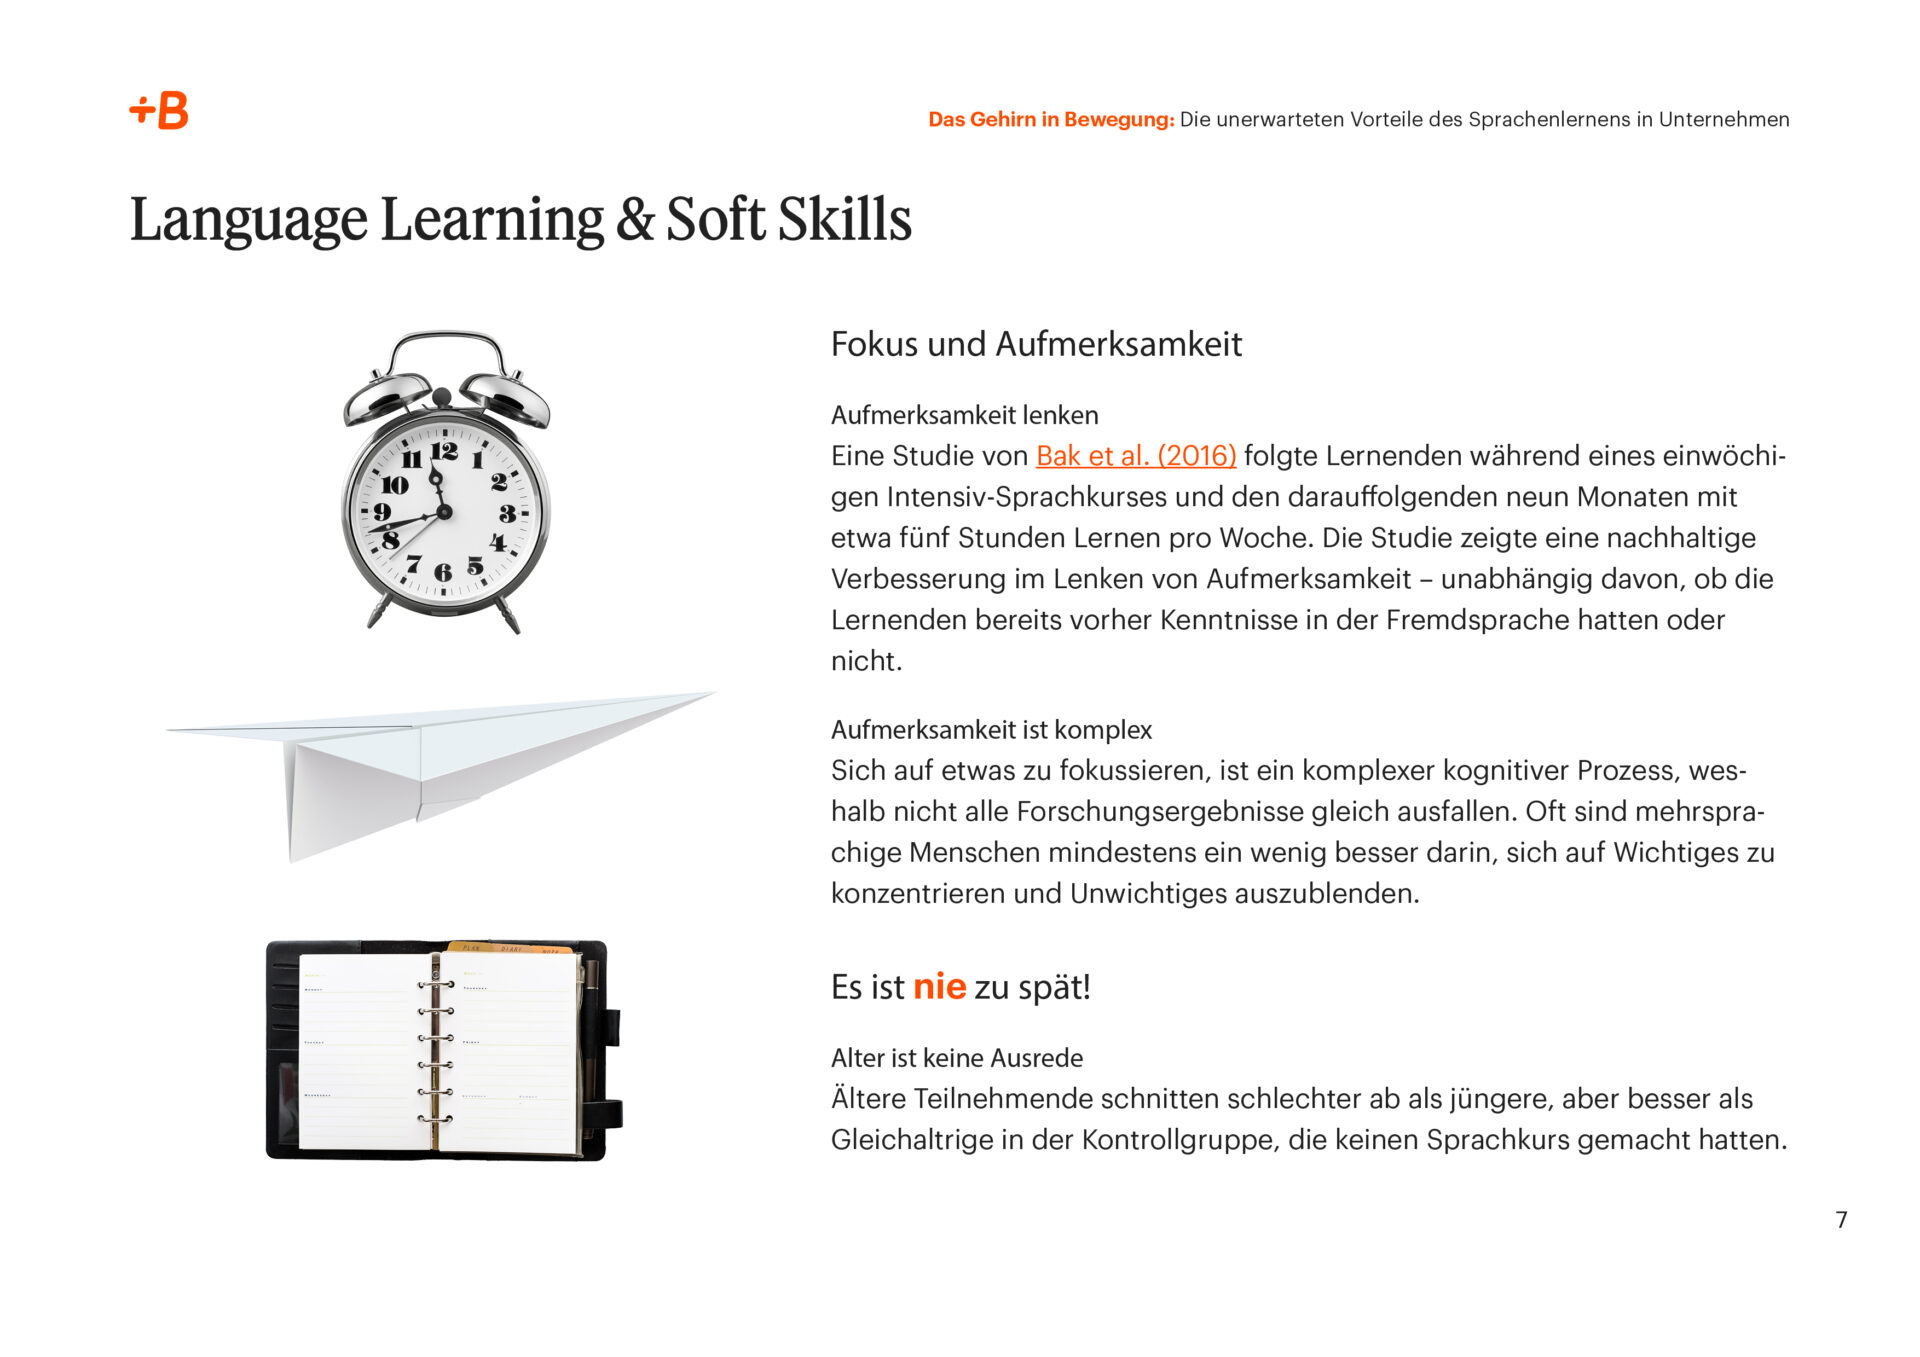 Wie Sprachenlernen Soft Skills & Growth Mindset fördert [eBook]